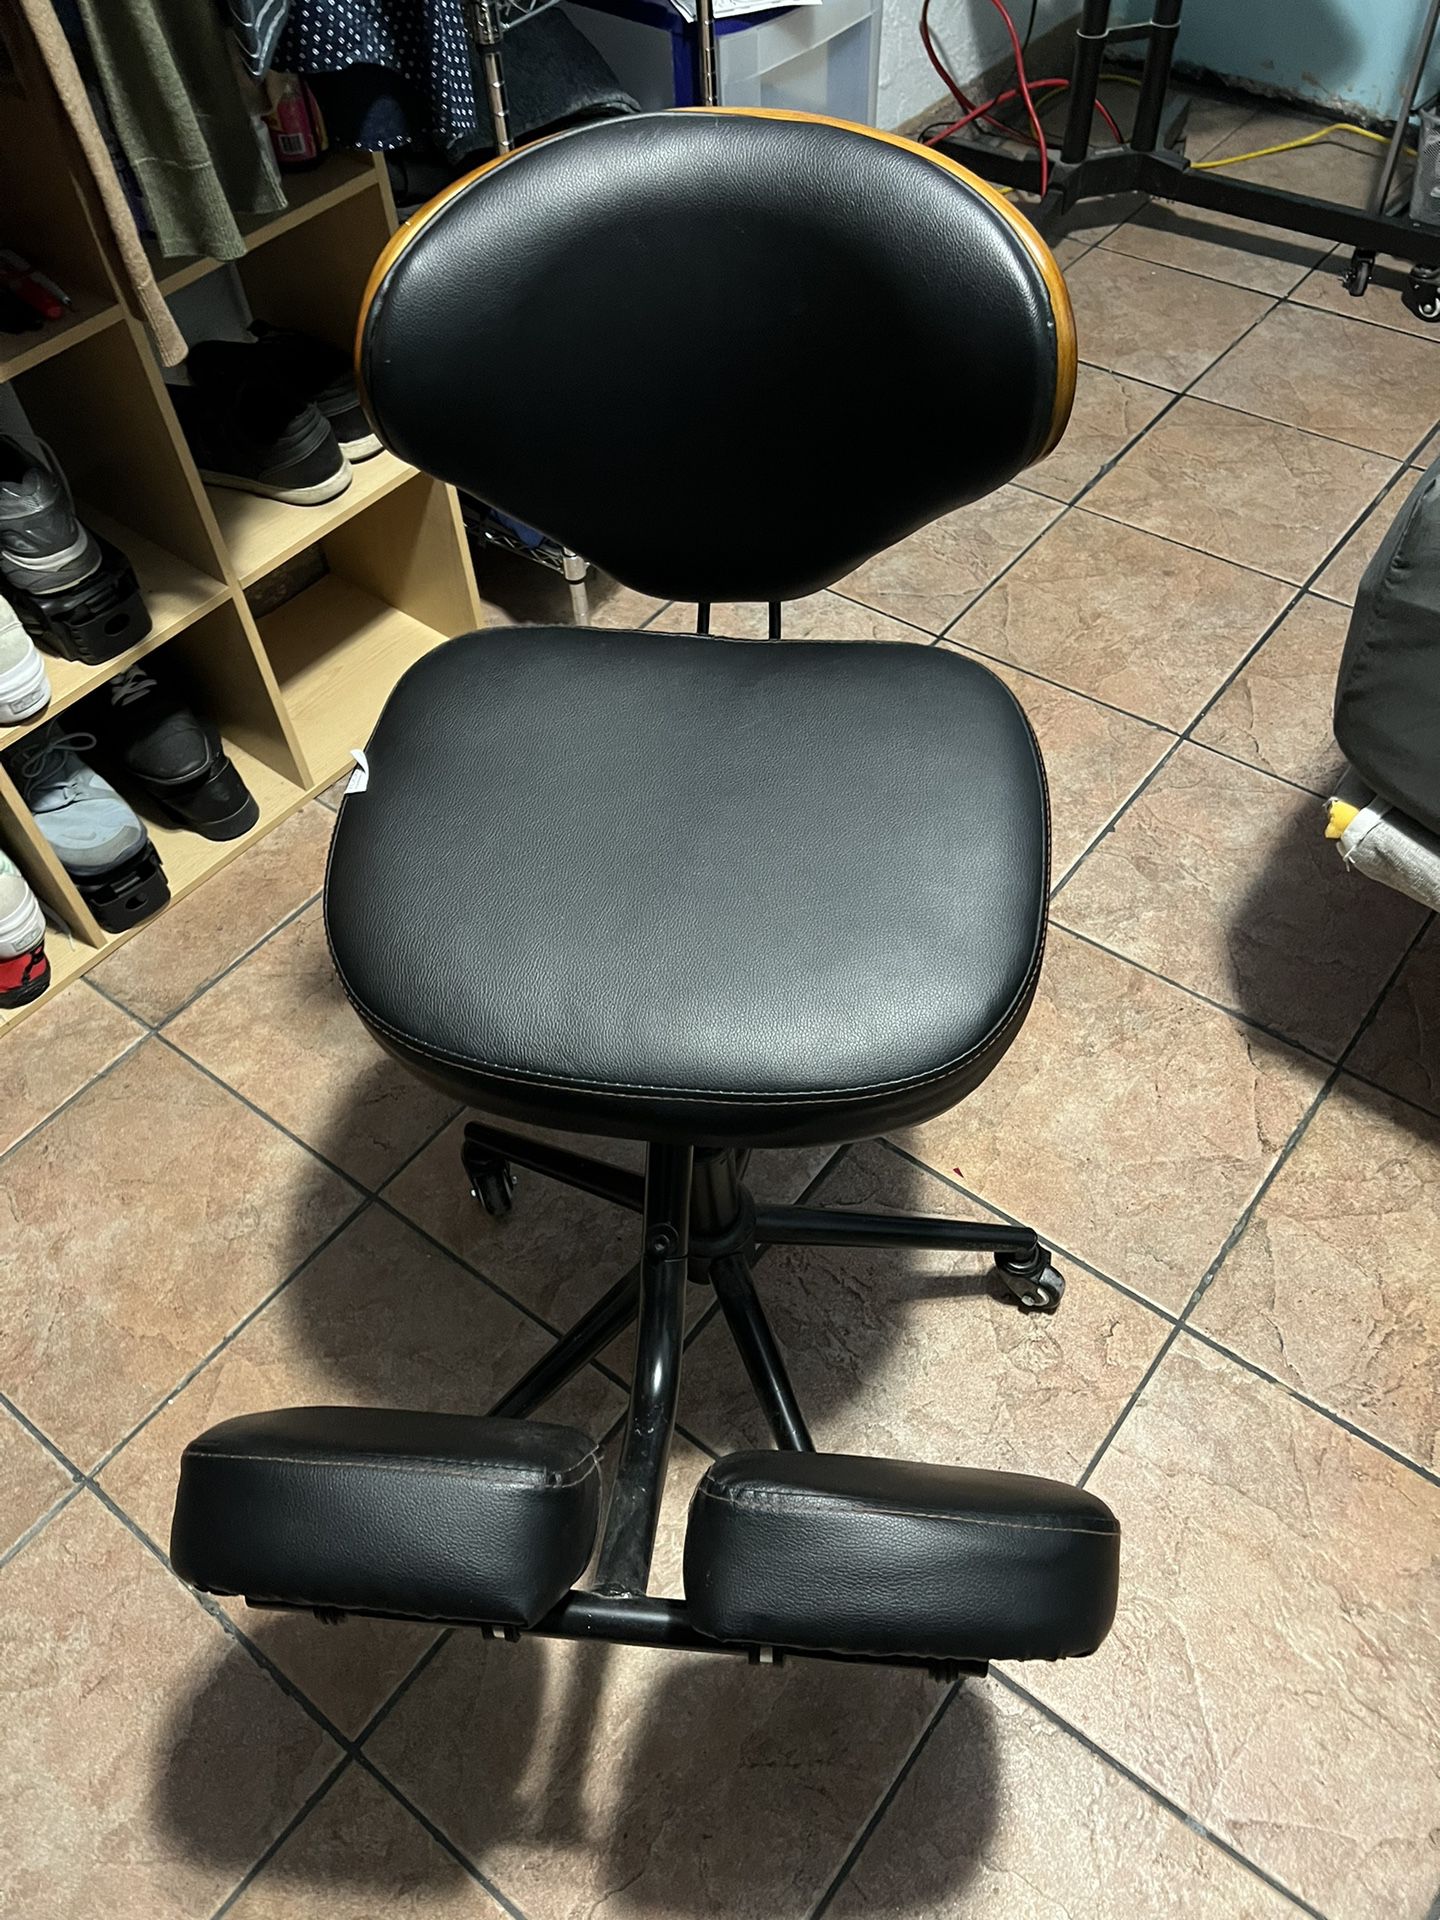 yoomee ergonomic kneeling chair $110 OBO